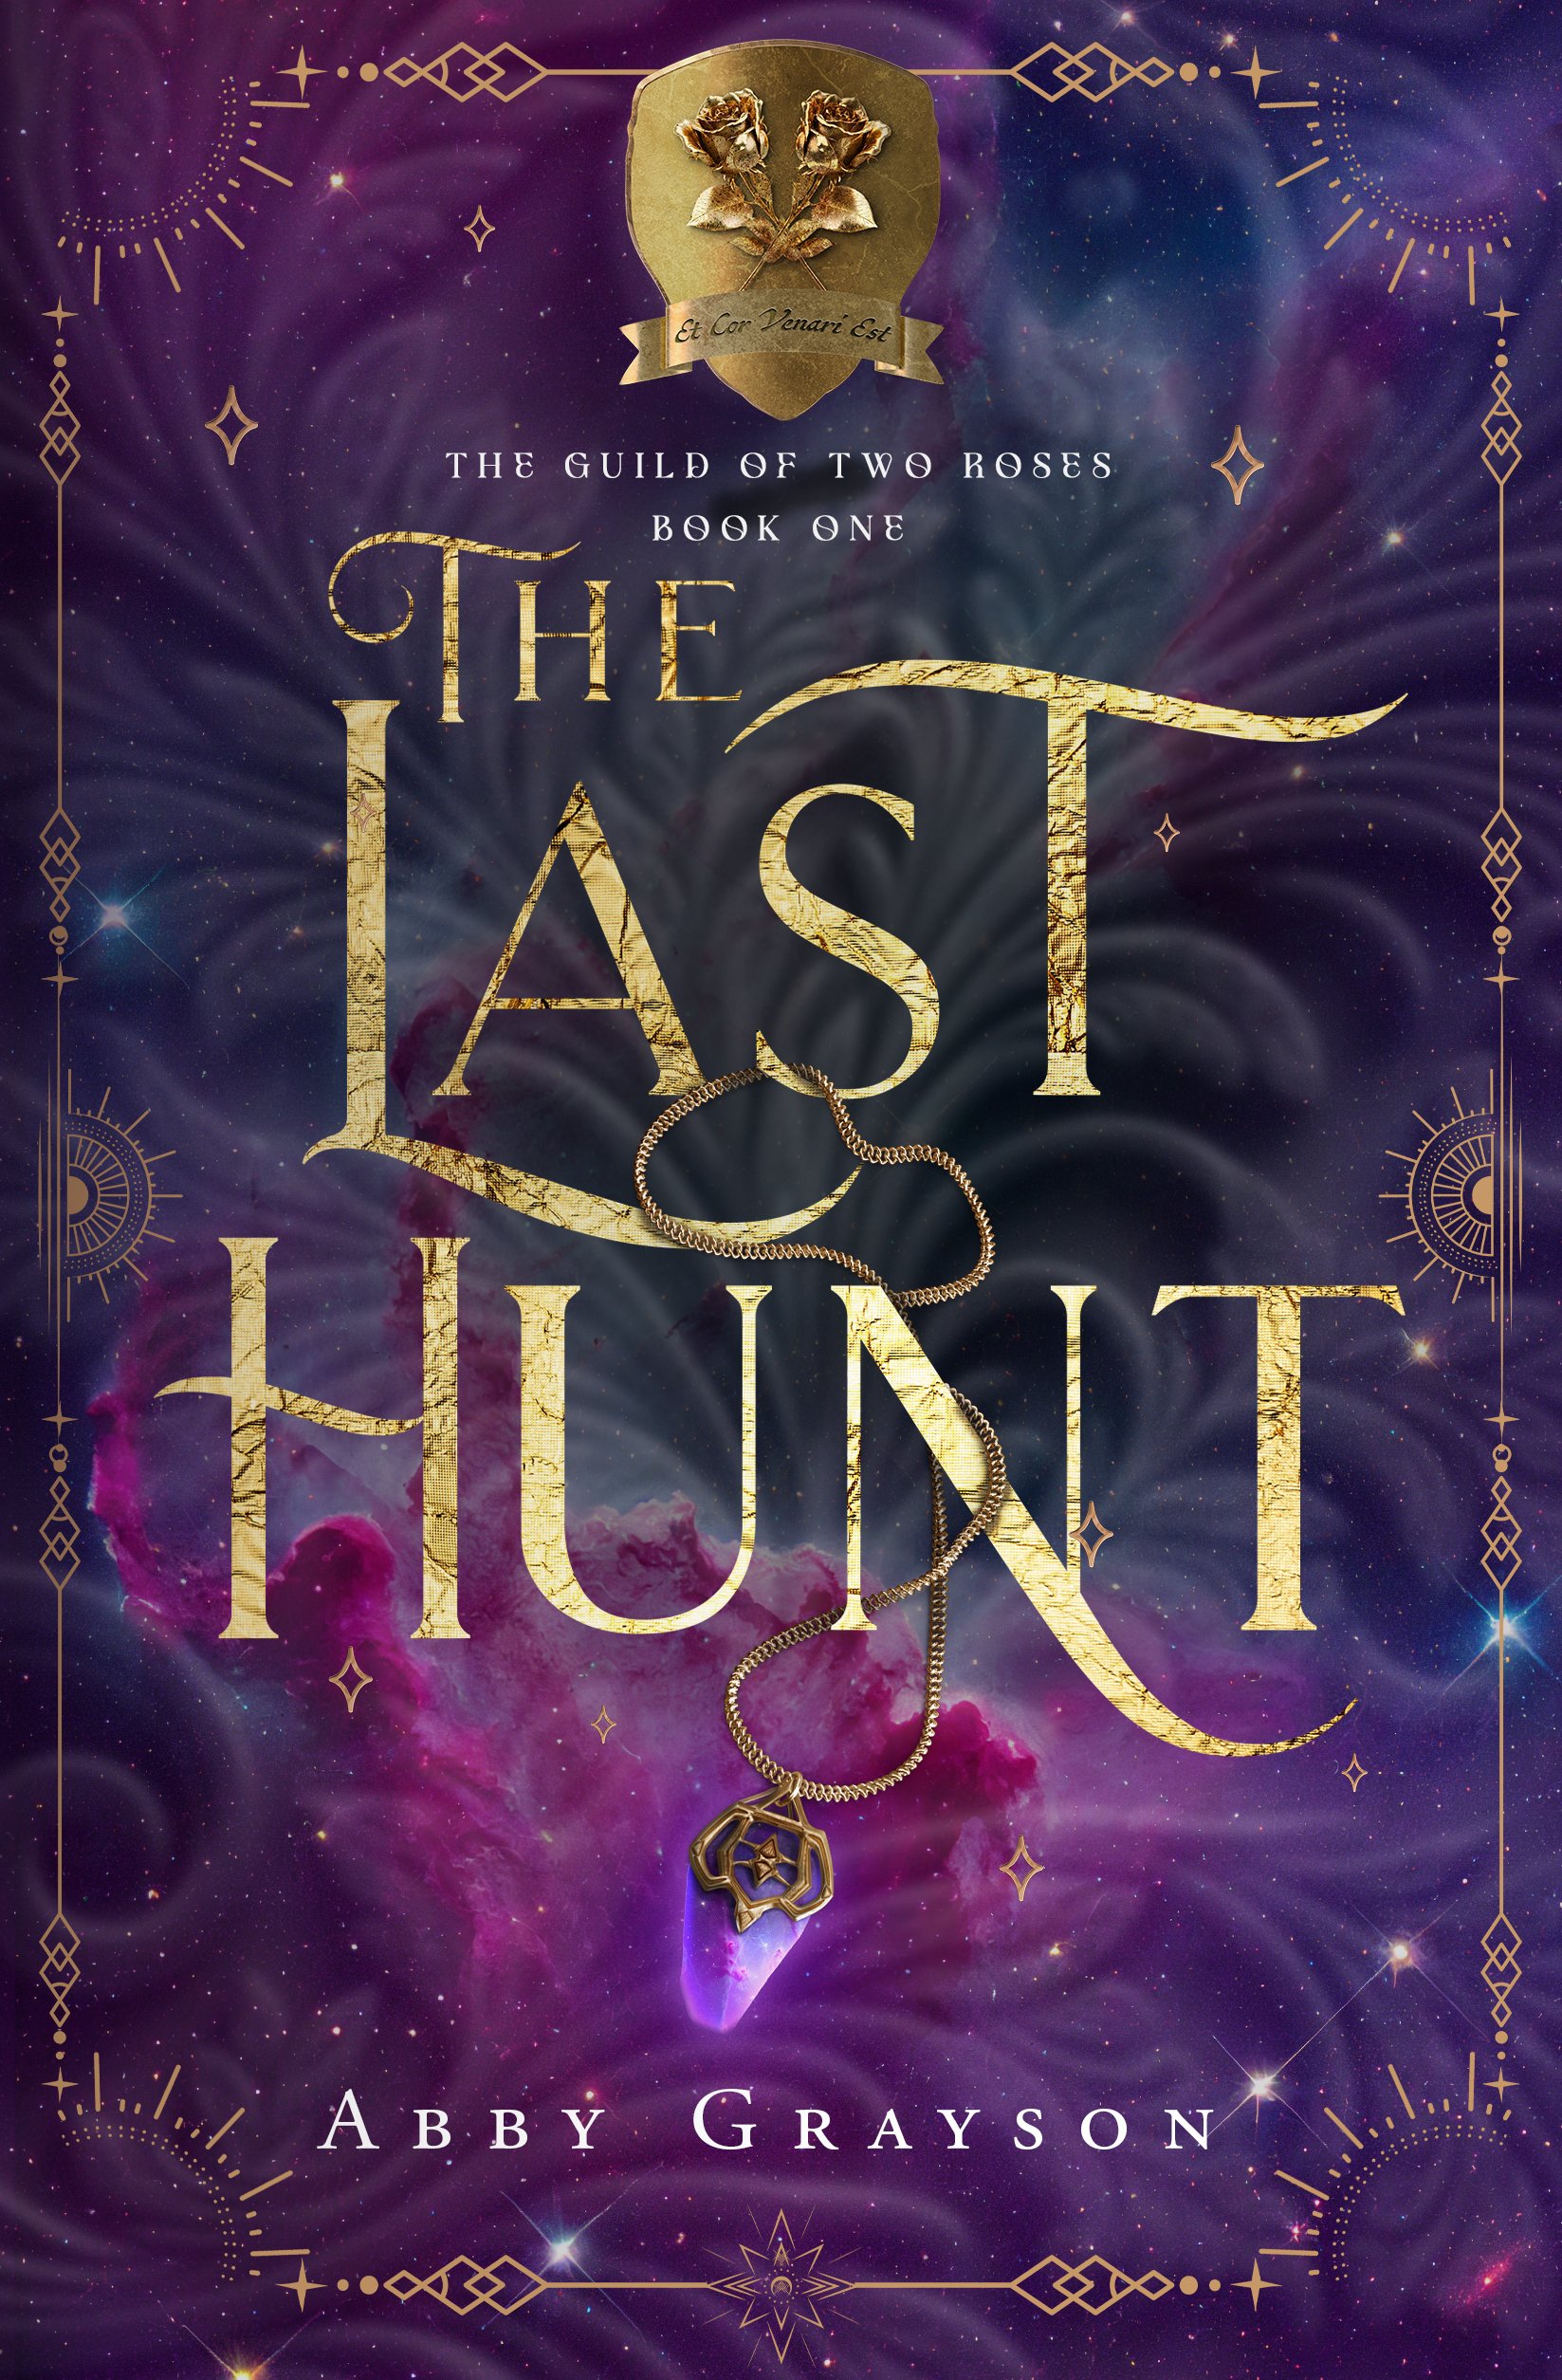 The Last Hunt - ebook cover.jpg